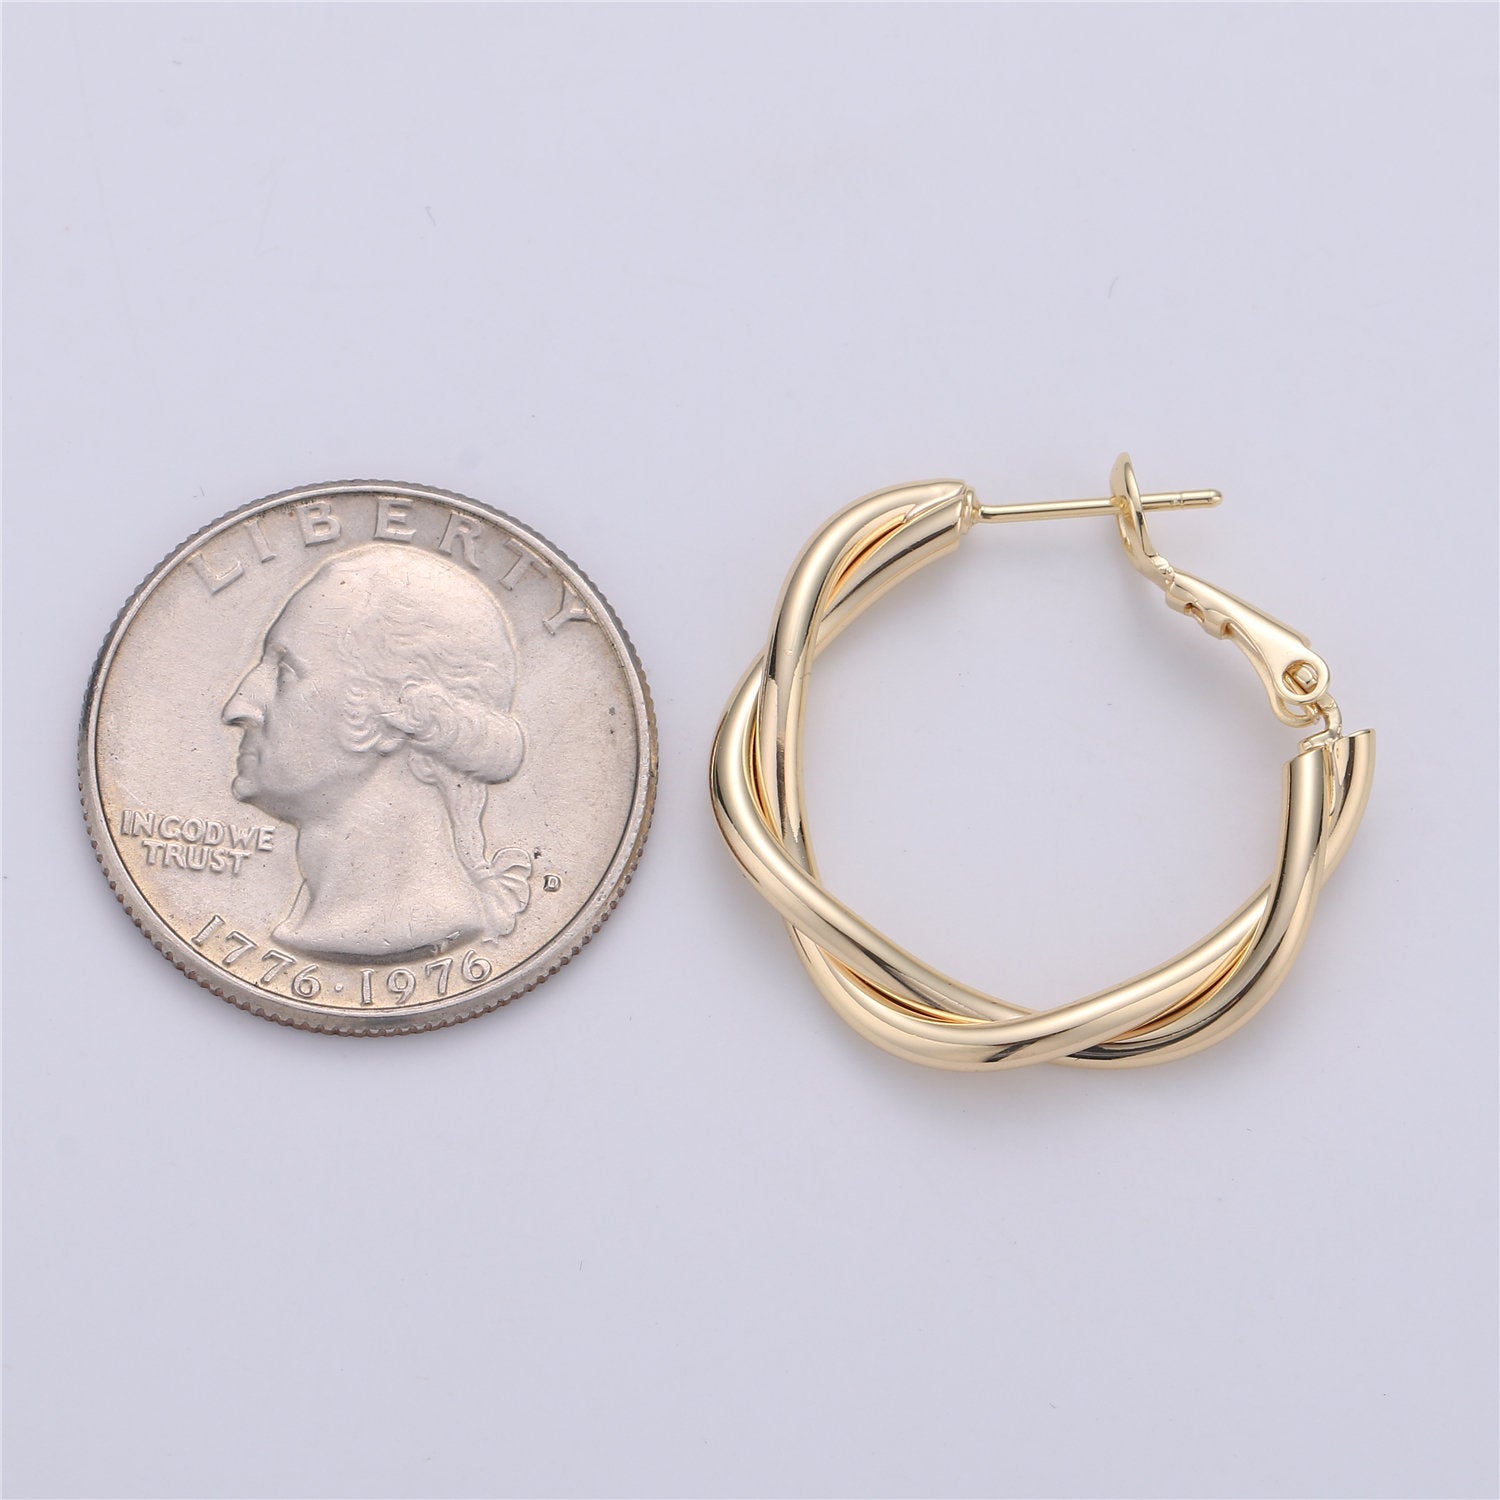 Dainty Gold Hoop Earring- Twisted Hoop Earring - Thin Earring - Gold Filled Hoop Ring - Minimalist Jewelry - 27mm Hoop Unique Earring Supply - DLUXCA